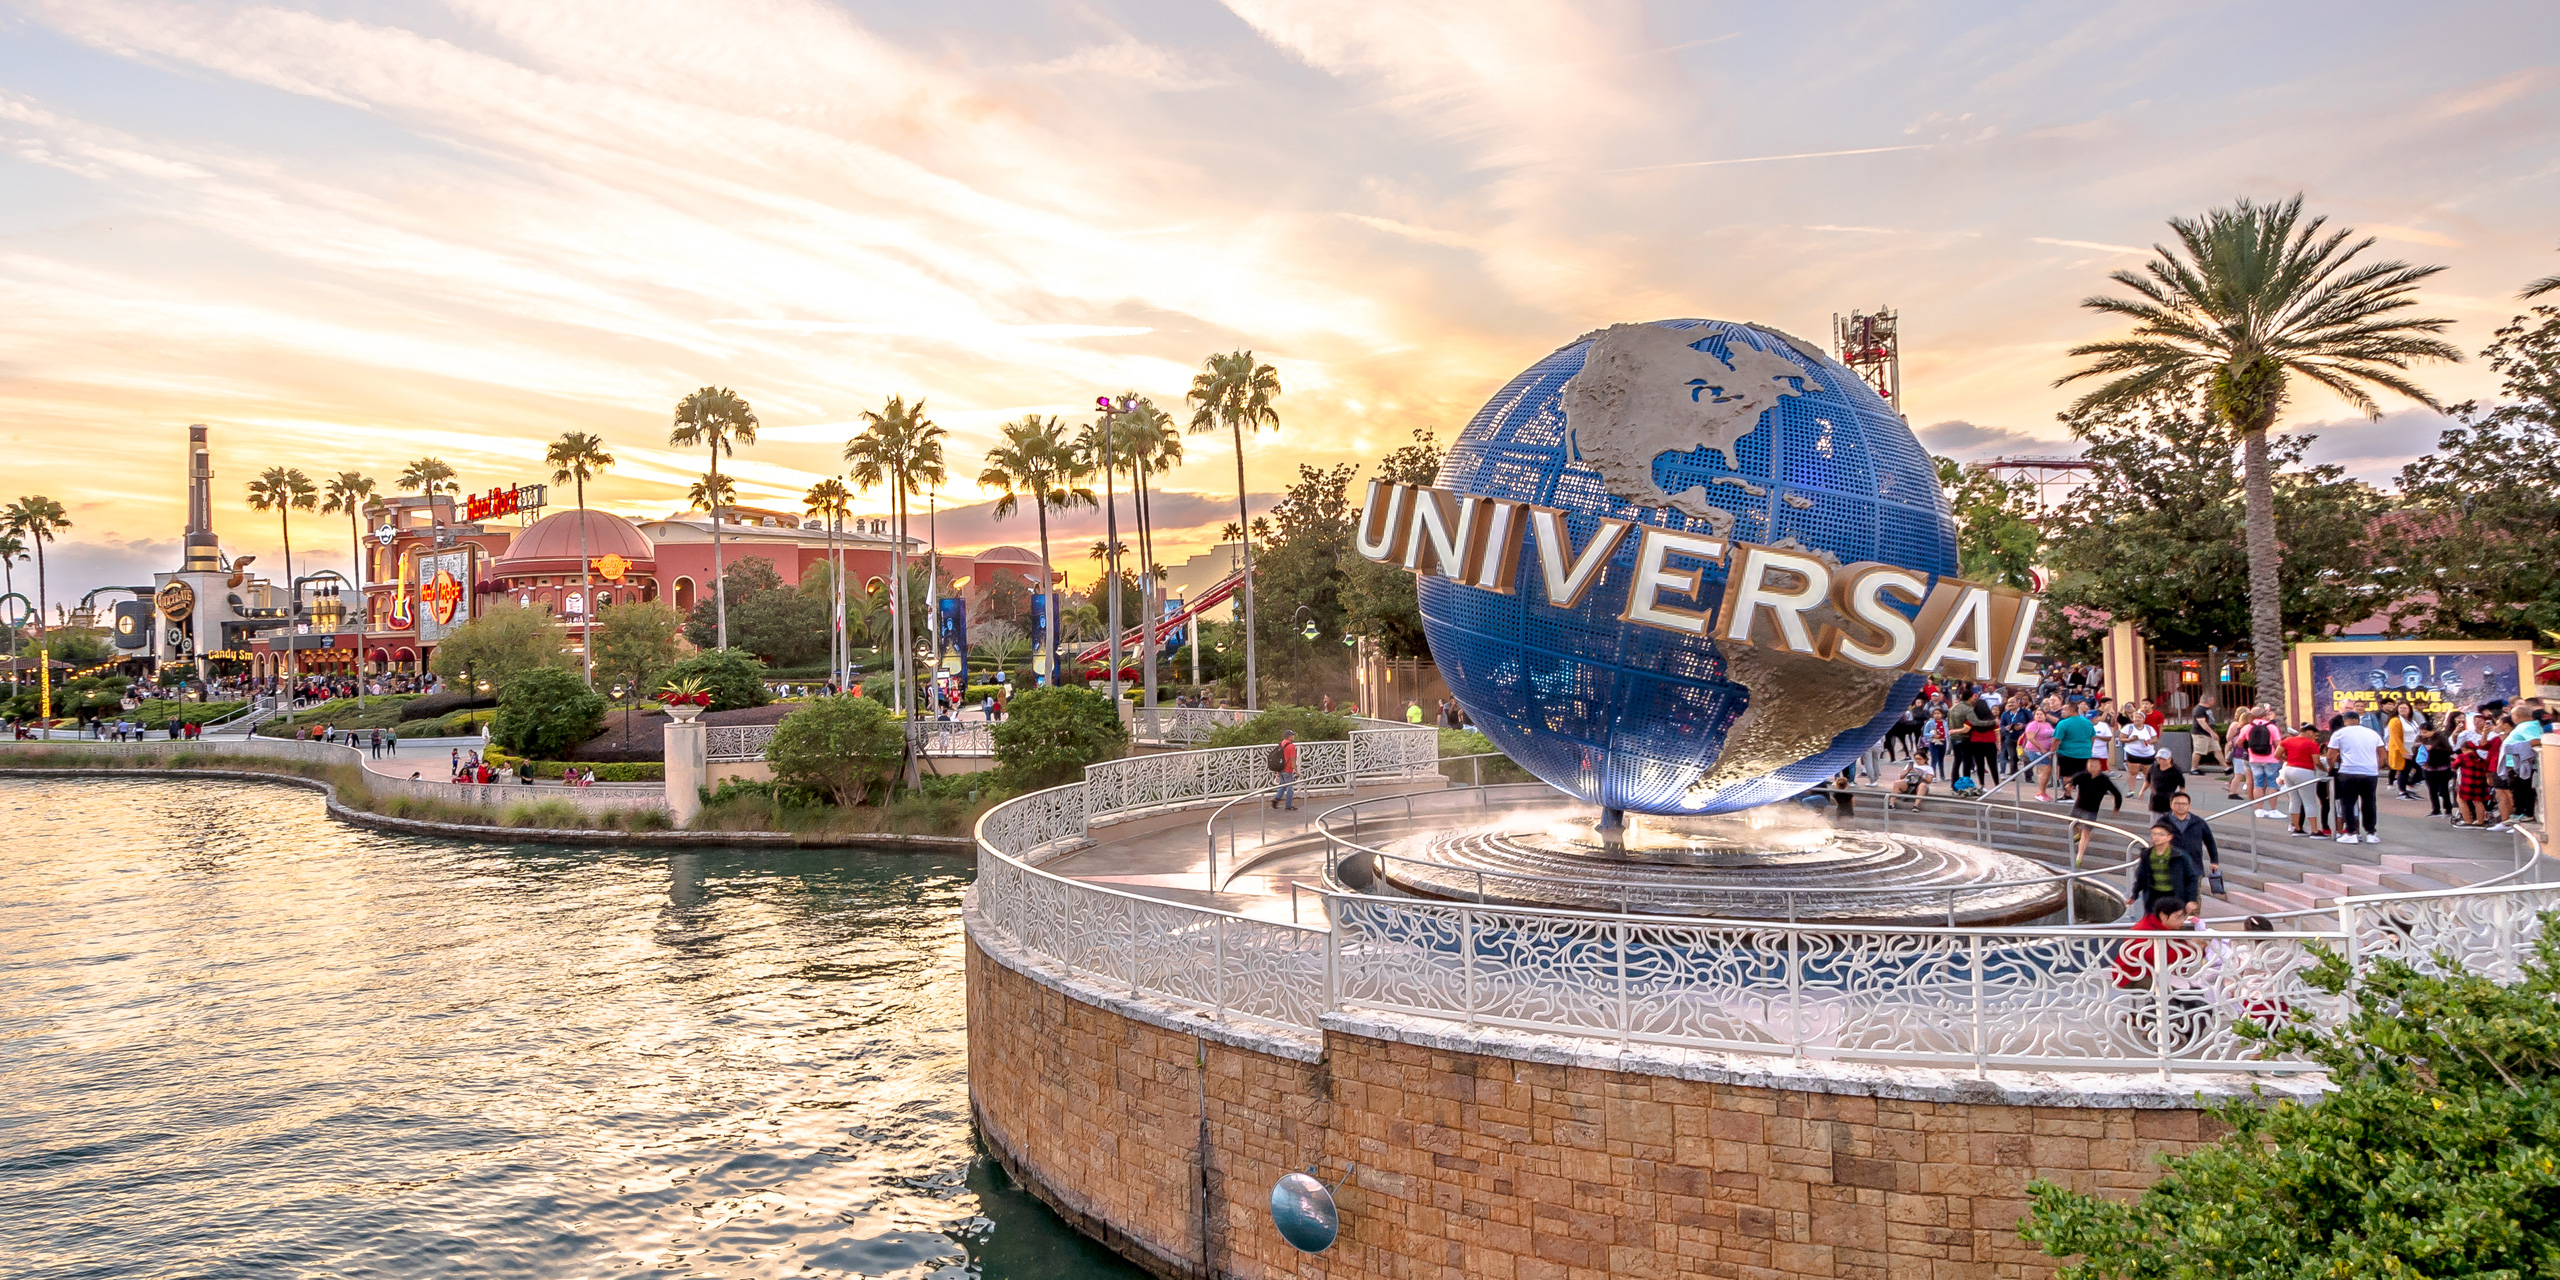 Universal Studios globe located at the entrance to the theme park; Courtesy of Chansak Joe/Shutterstock